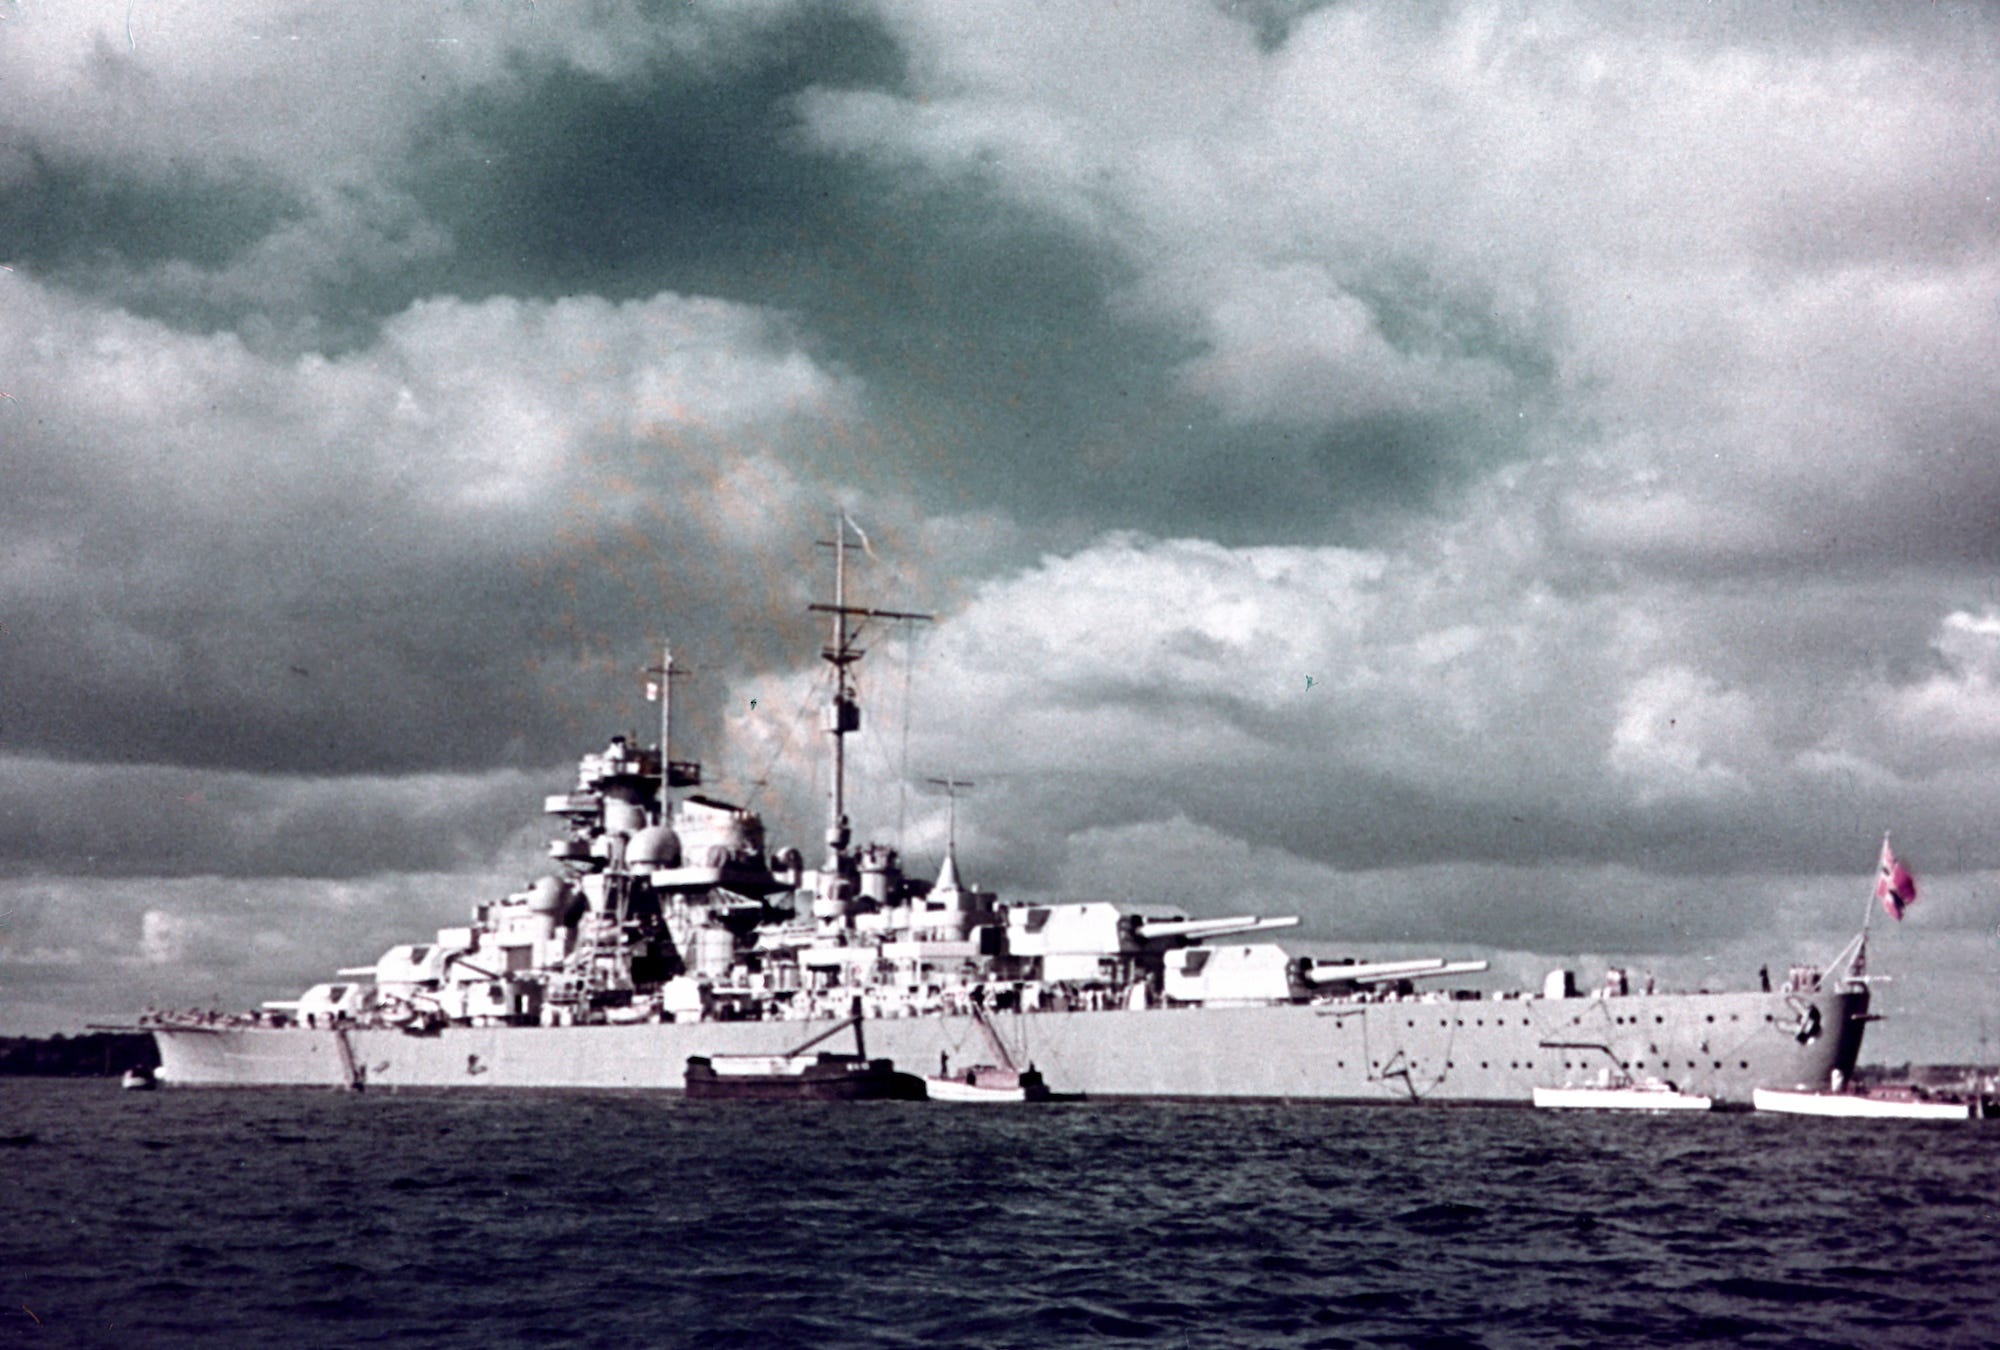 Nazi Germany navy battleship Bismarck